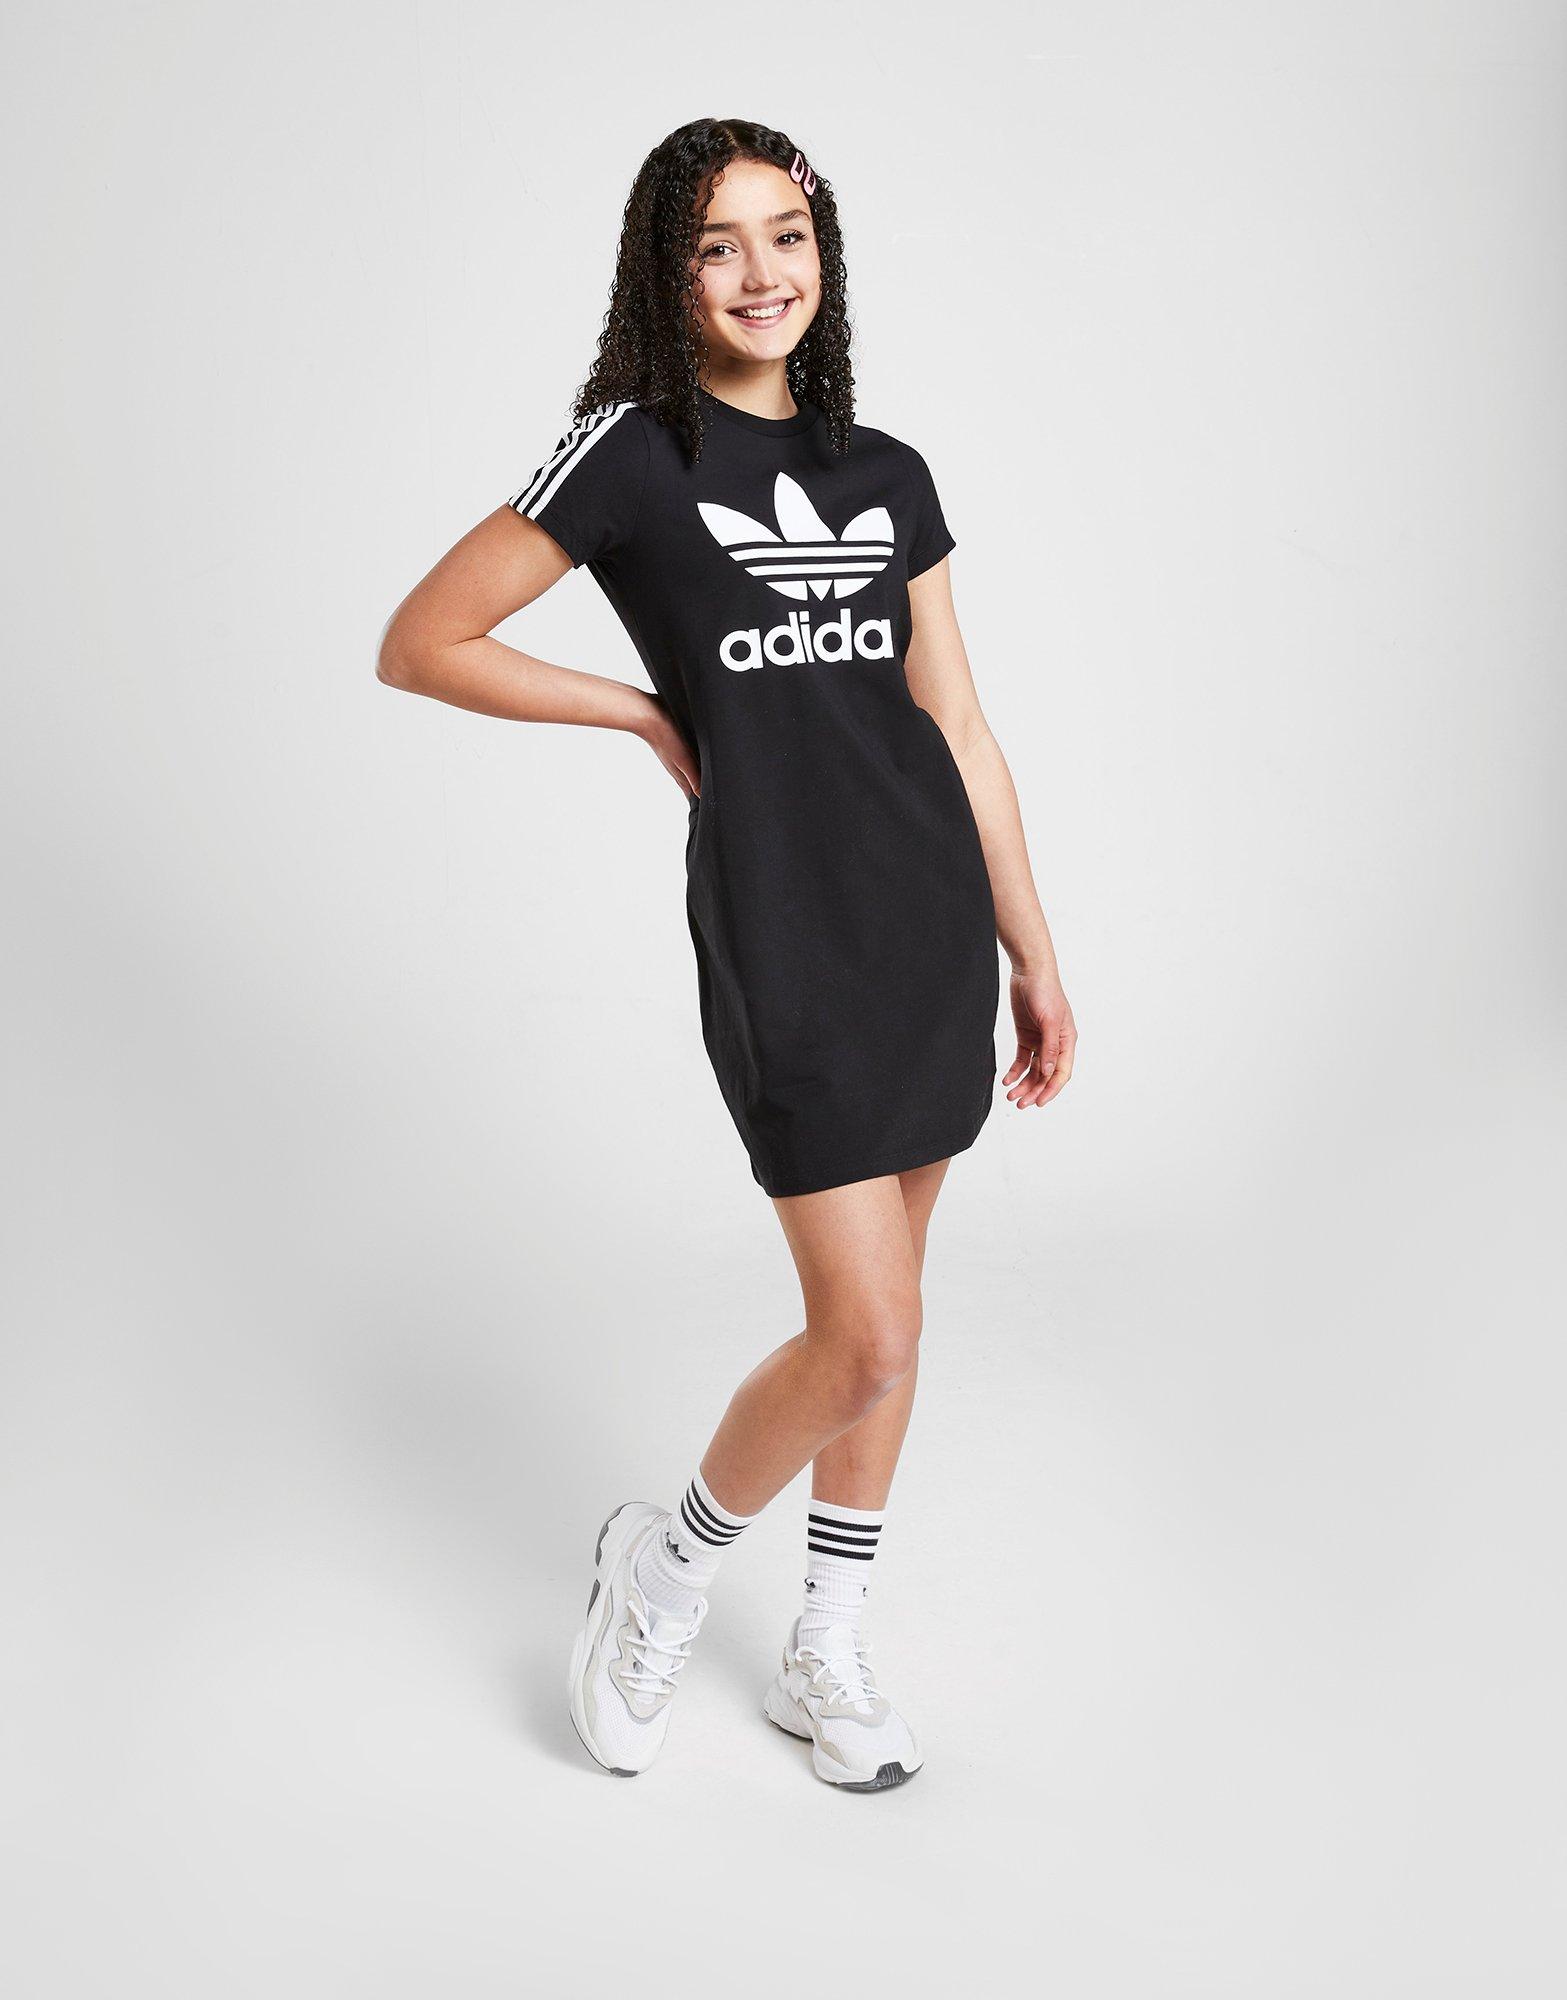 adidas girls skater dress